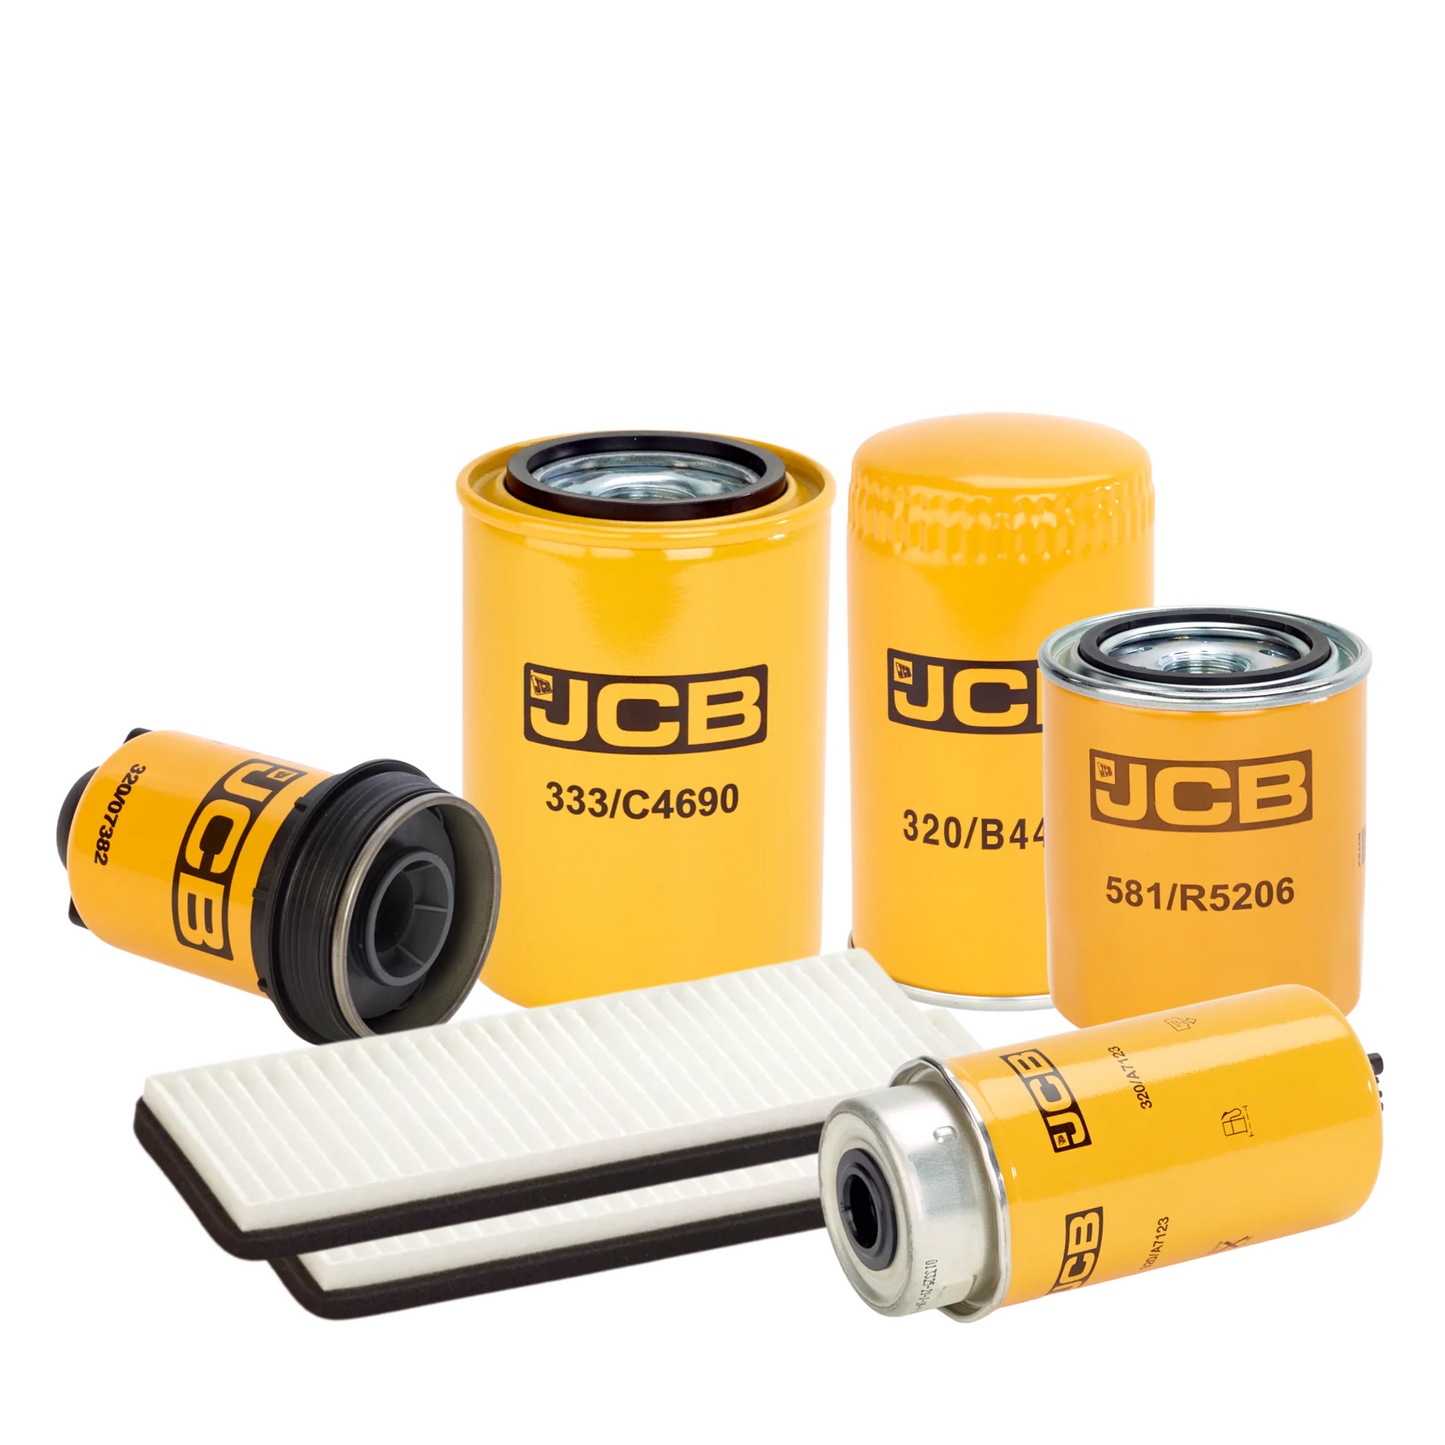 JCB 535-140 1500 Hour Filter Service Kit